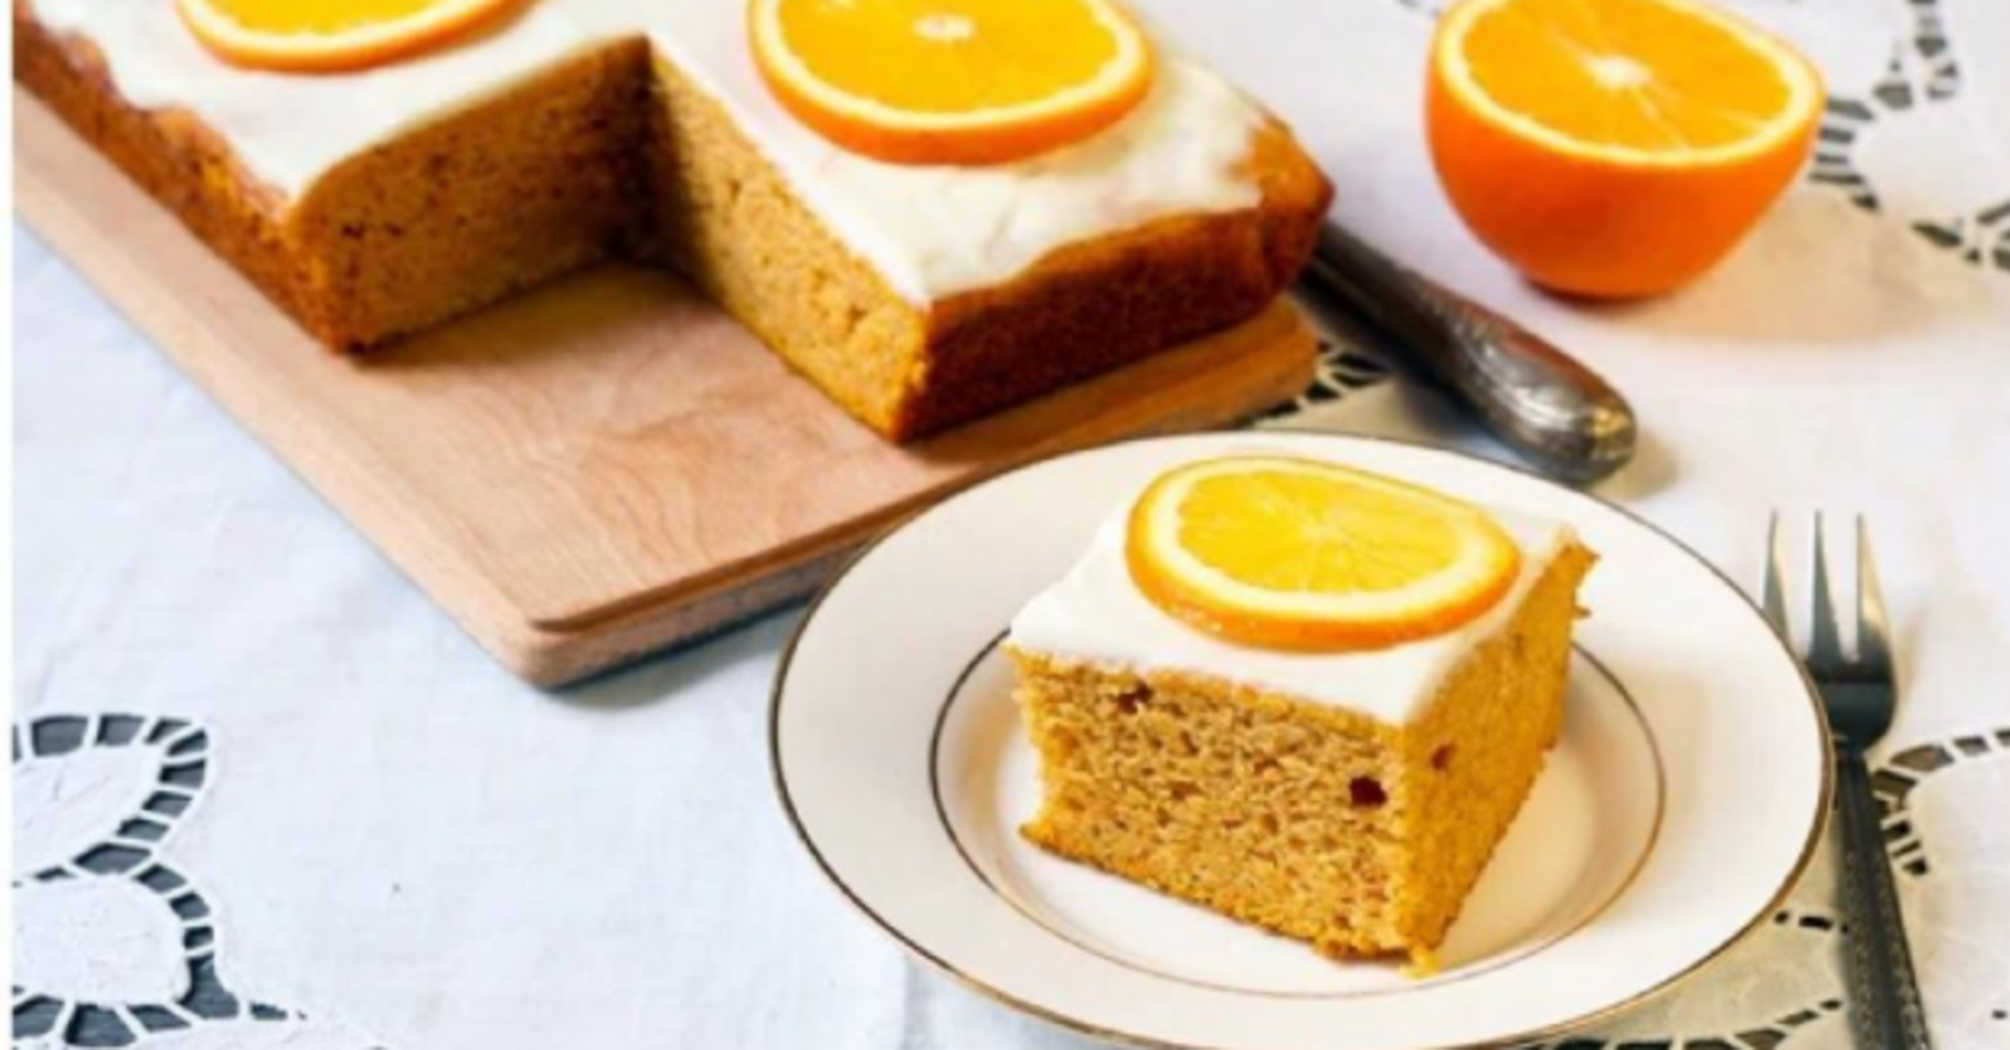 A cake that won't make you gain weight: a recipe